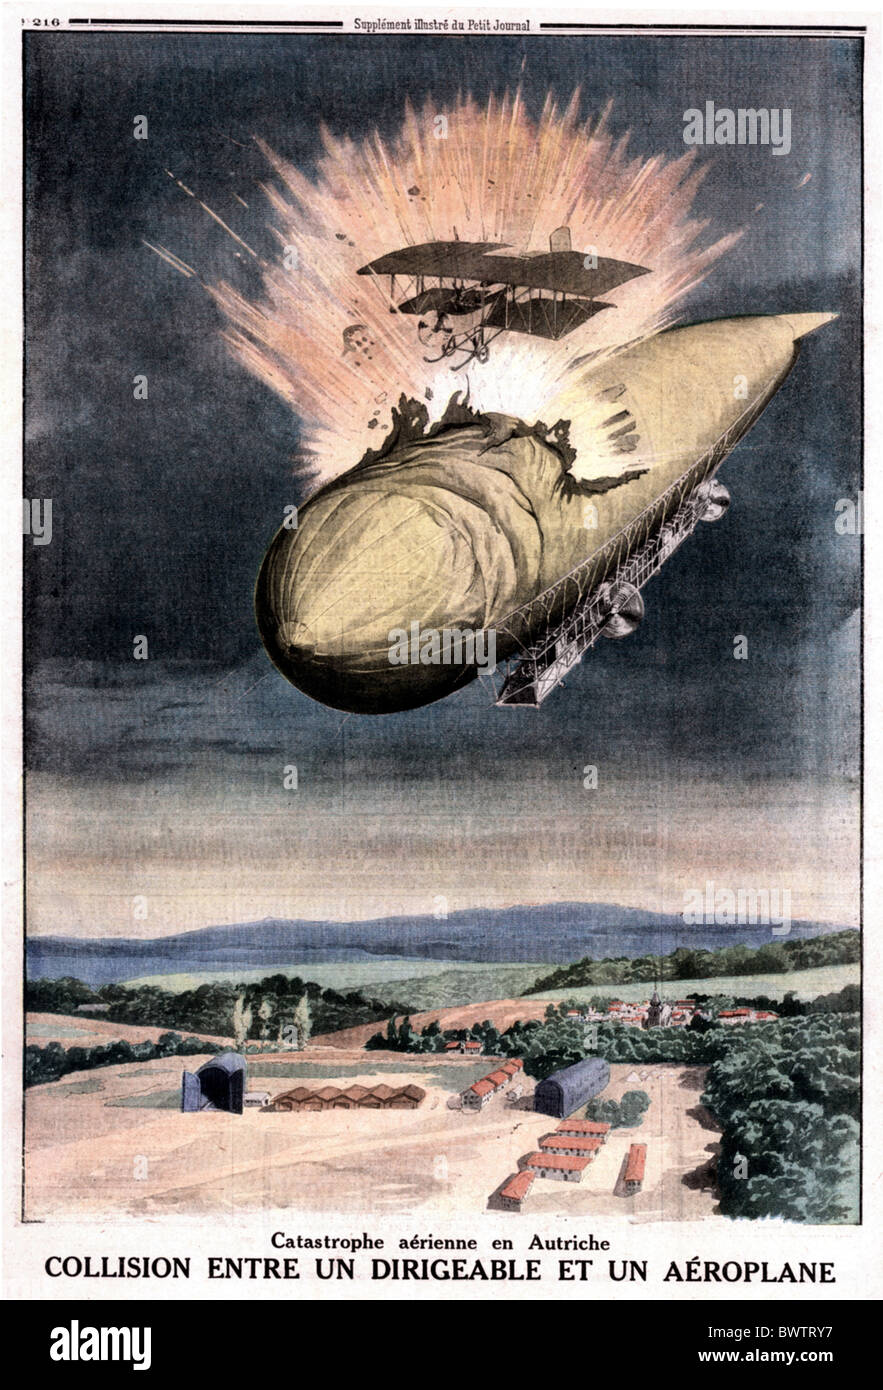 Le Petit Journal magazine cover 1914 World War I WW1 aeroplane balloon airforce fight Collision illustratio Stock Photo